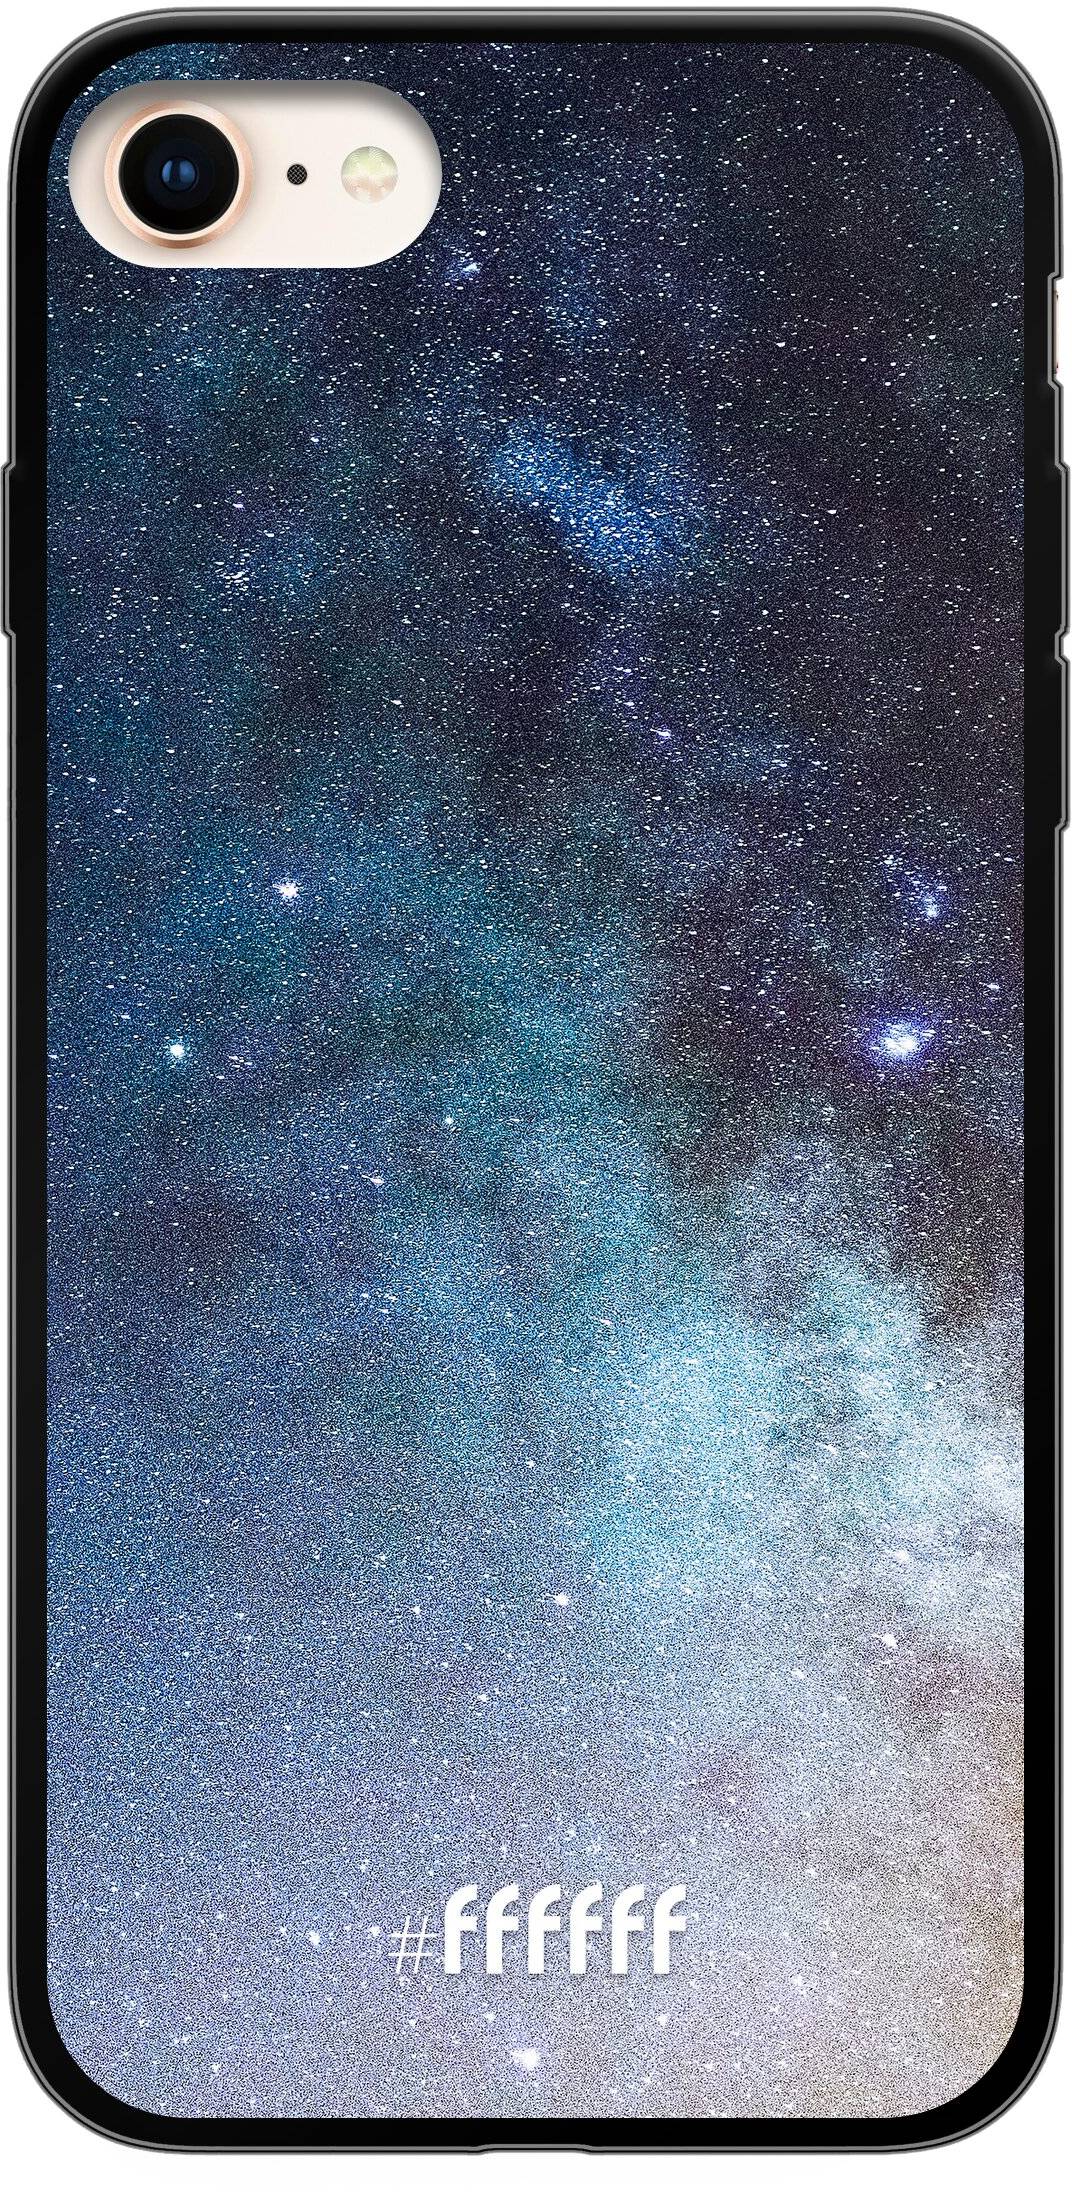 Milky Way iPhone 7